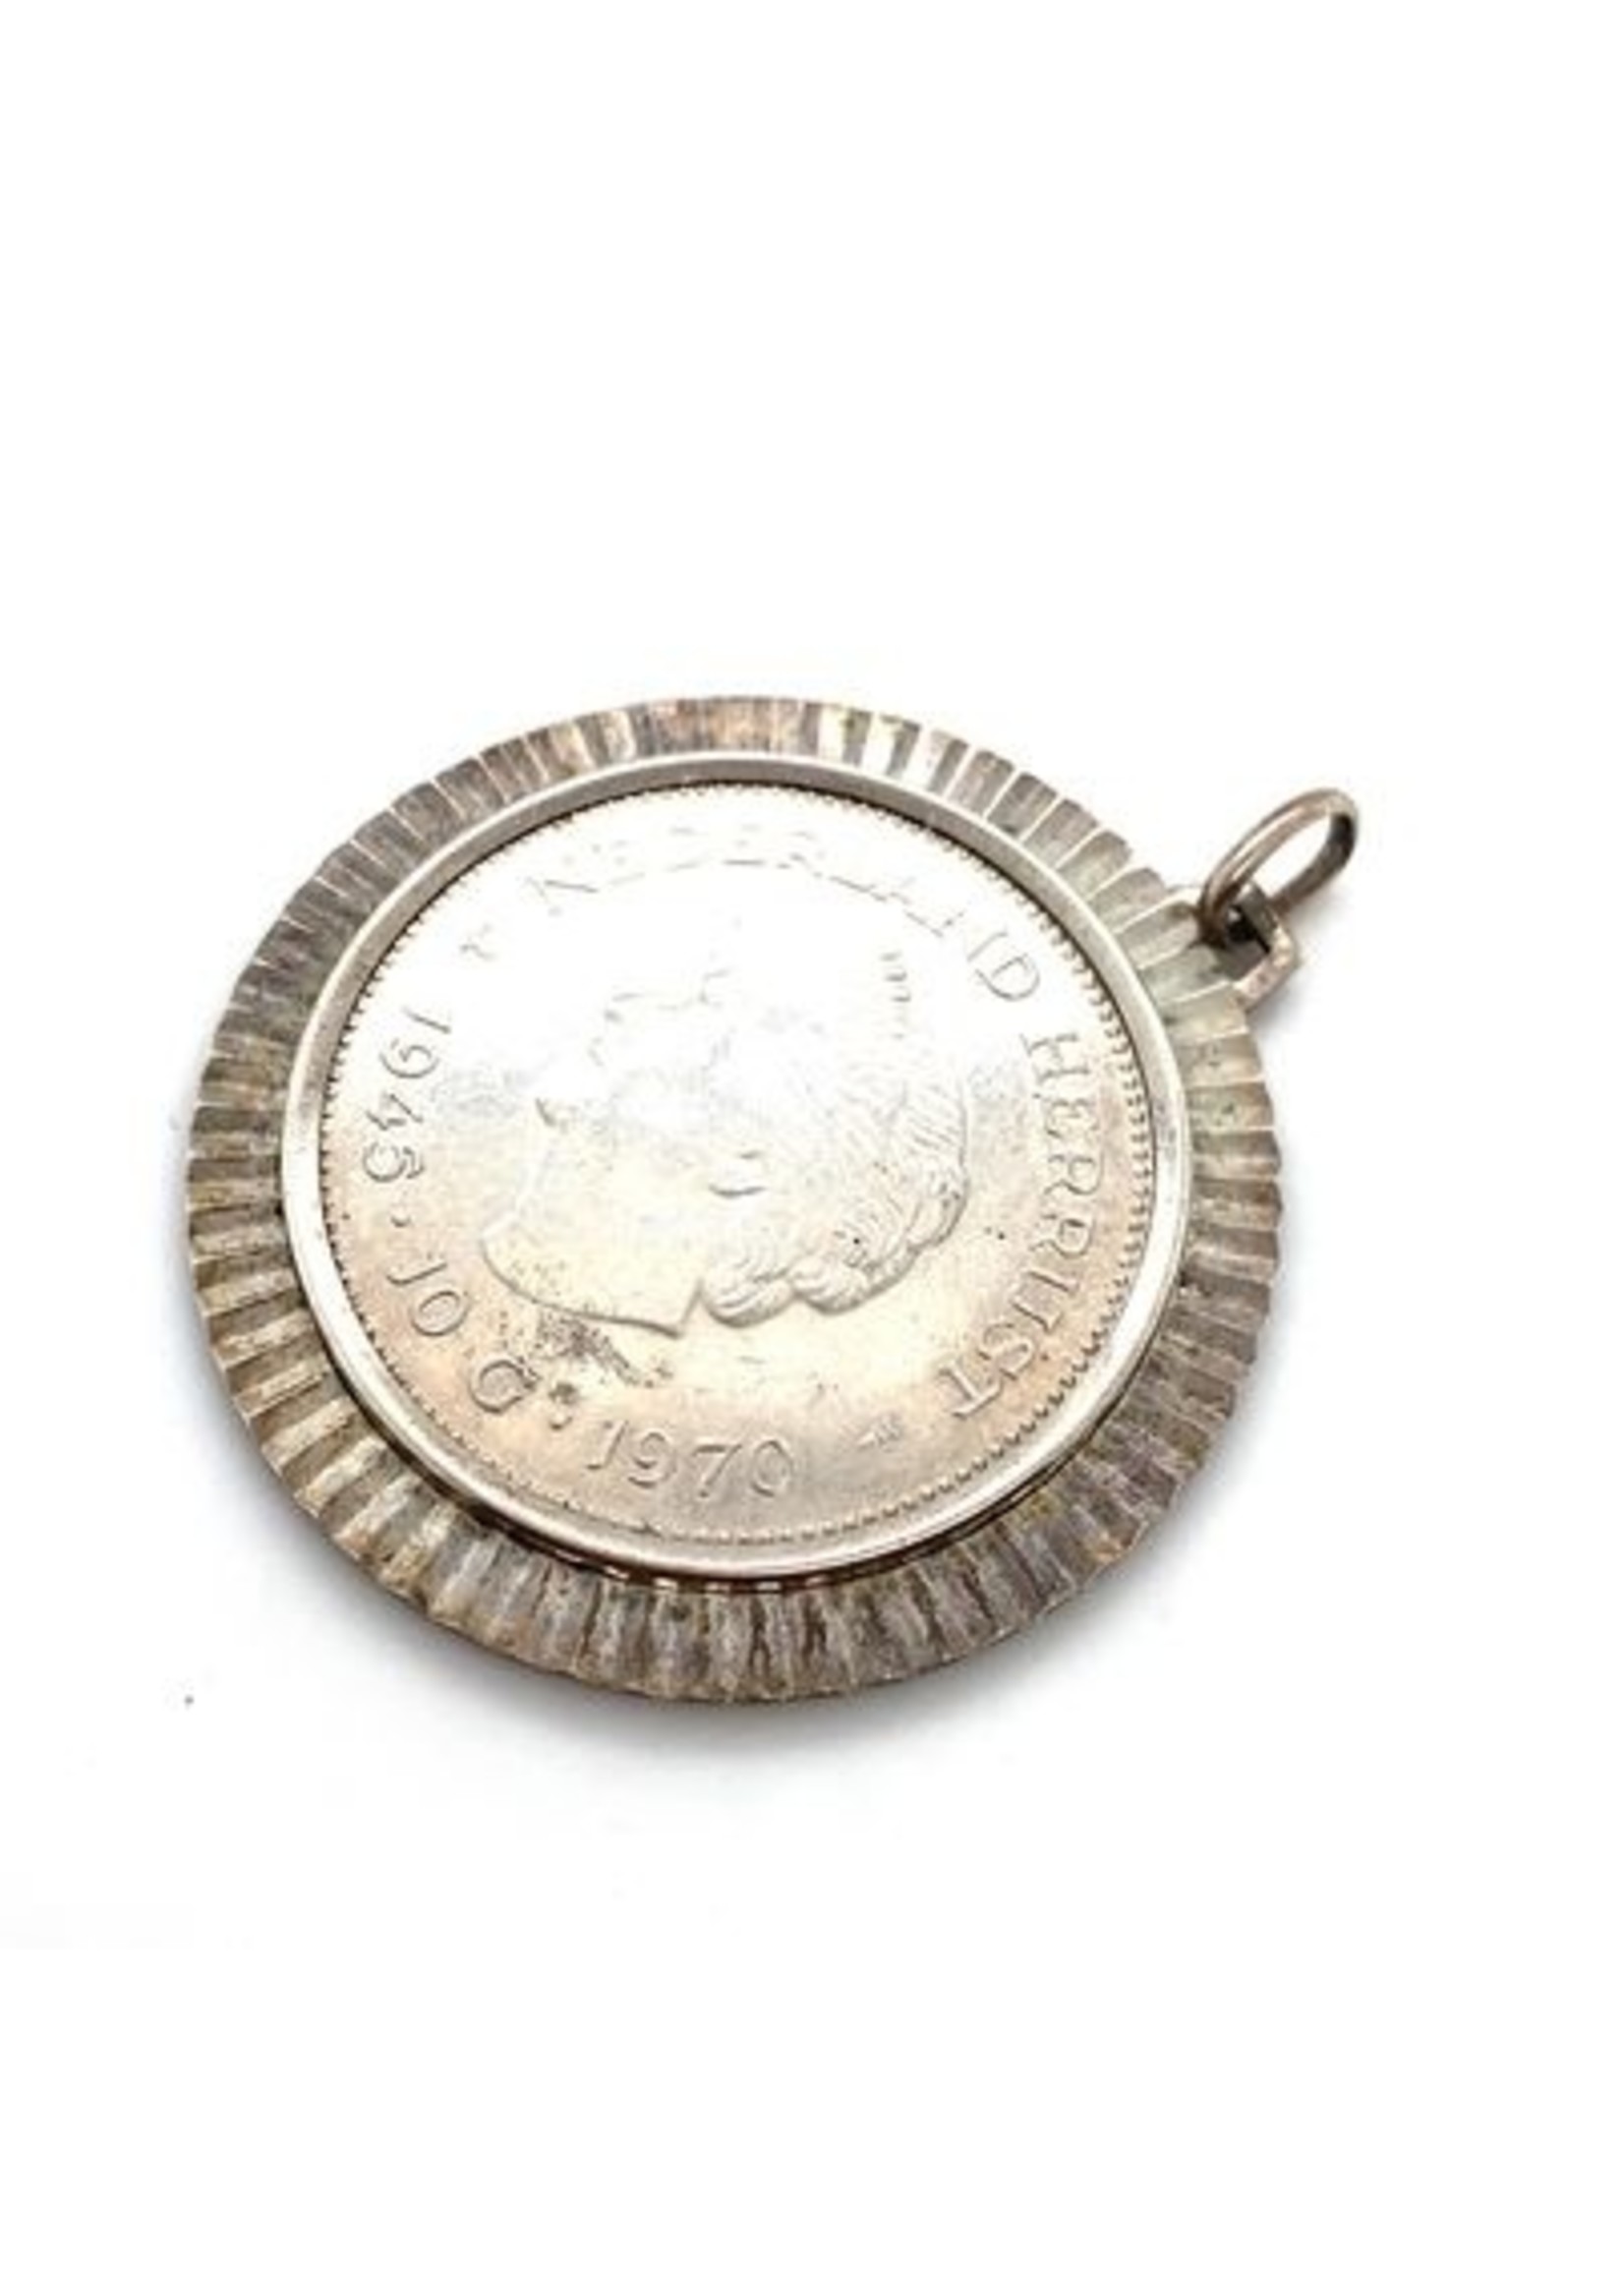 Vintage & Occasion Occasion zilver hanger met munt Juliana 10 gulden 1945-1970